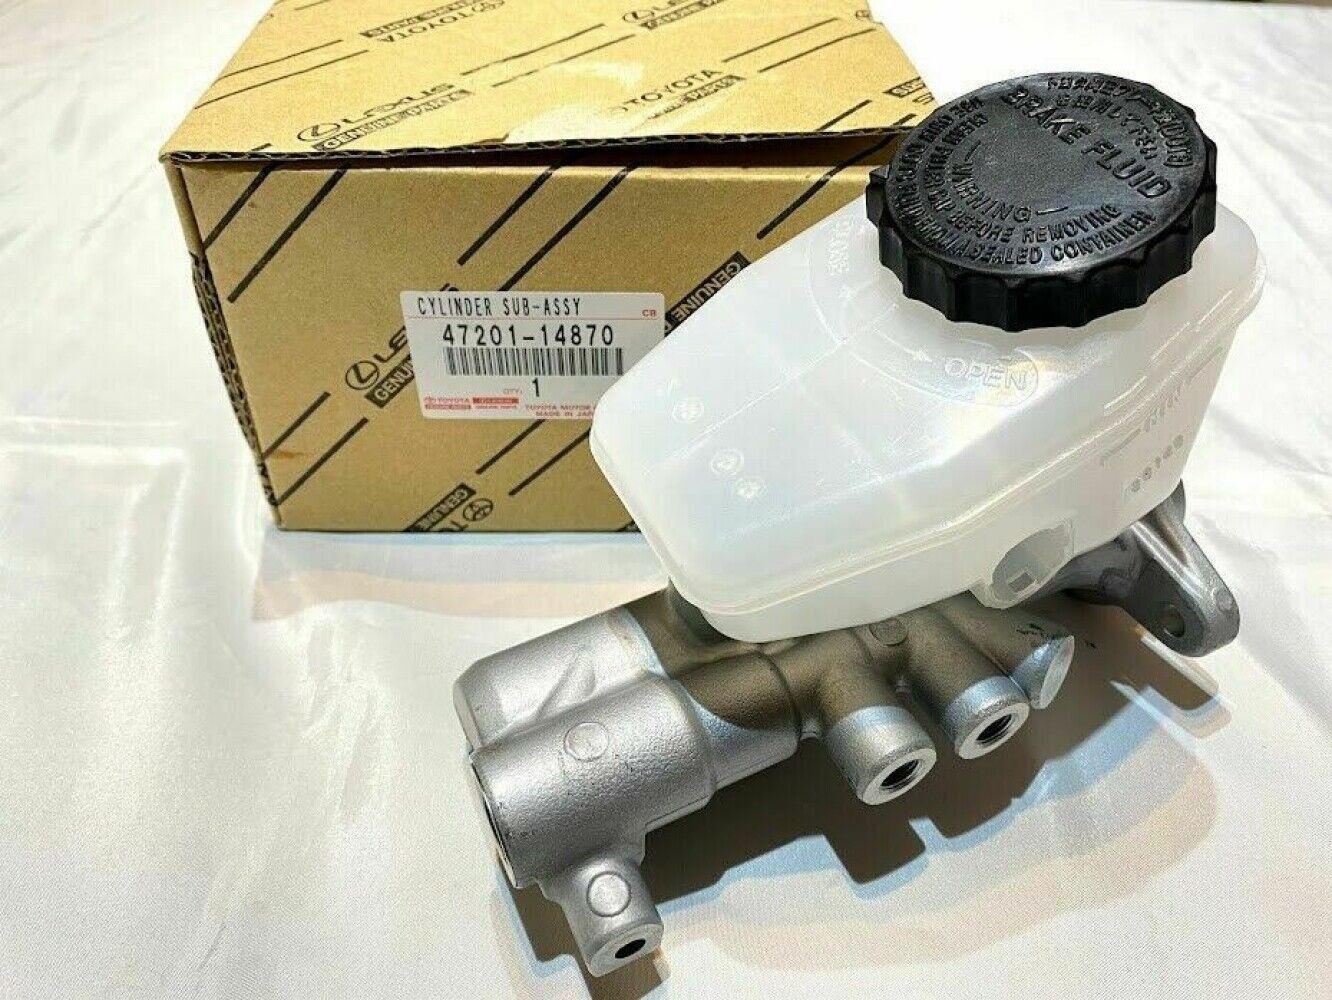 TOYOTA Genuine SUPRA Wheels Brake Master Cylinder Gasket Set 47201-14870